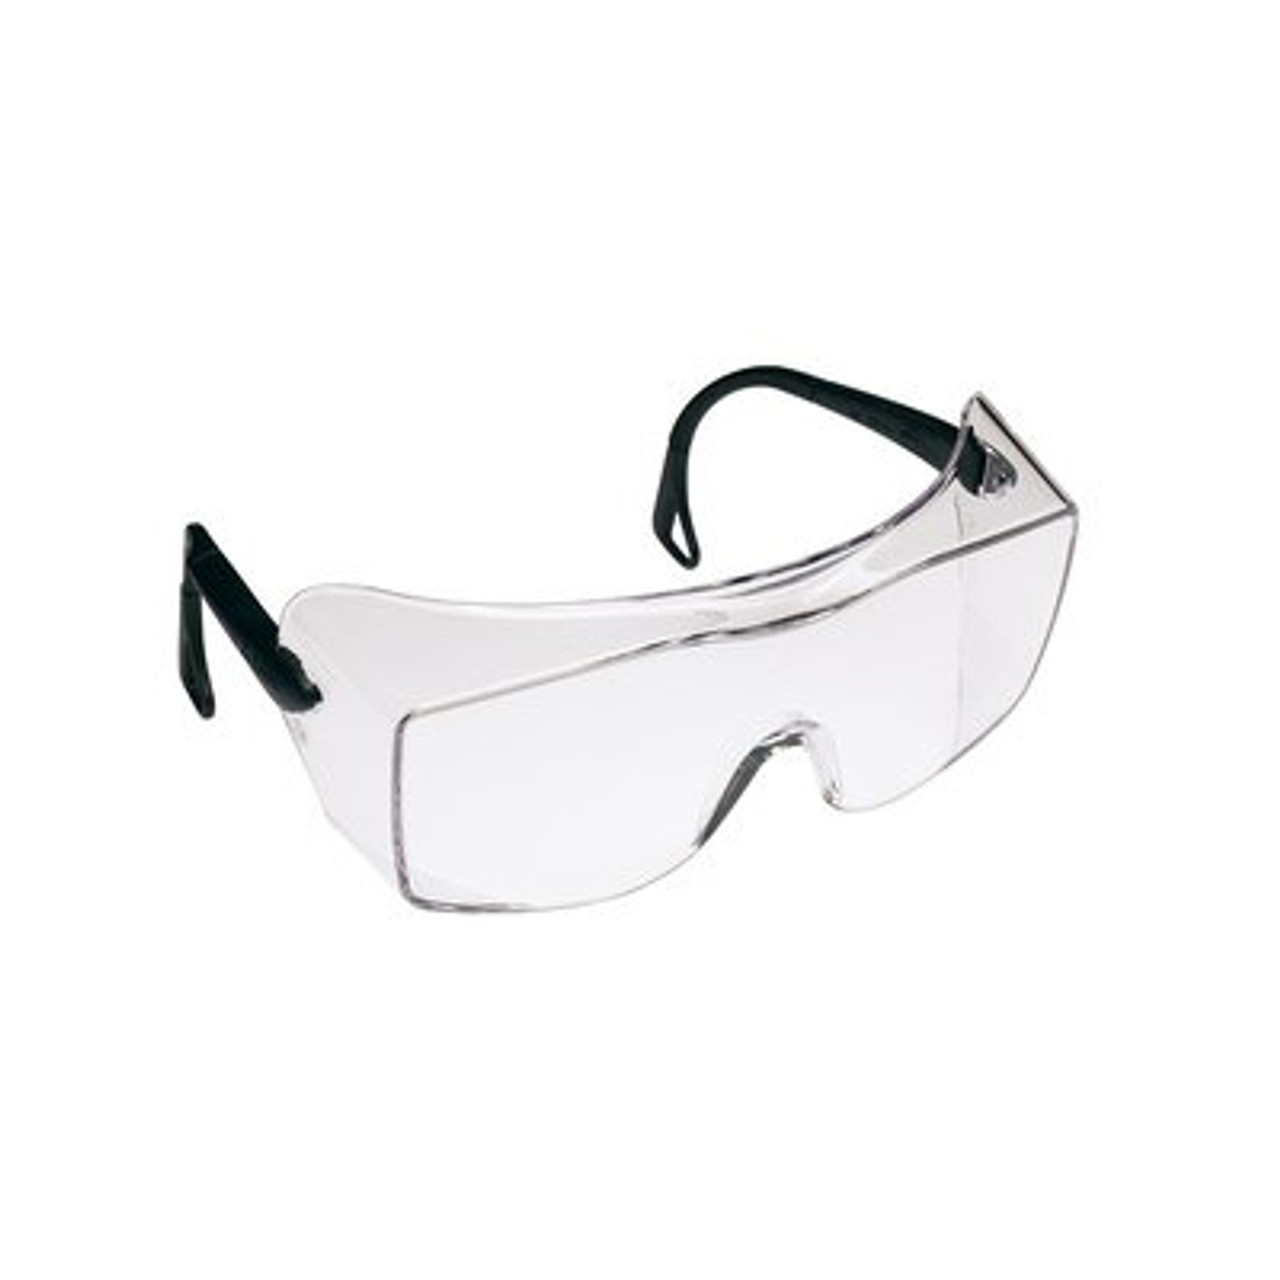 3m Clear Anti Fog Over Glass Safety Glasses Black Tremtech